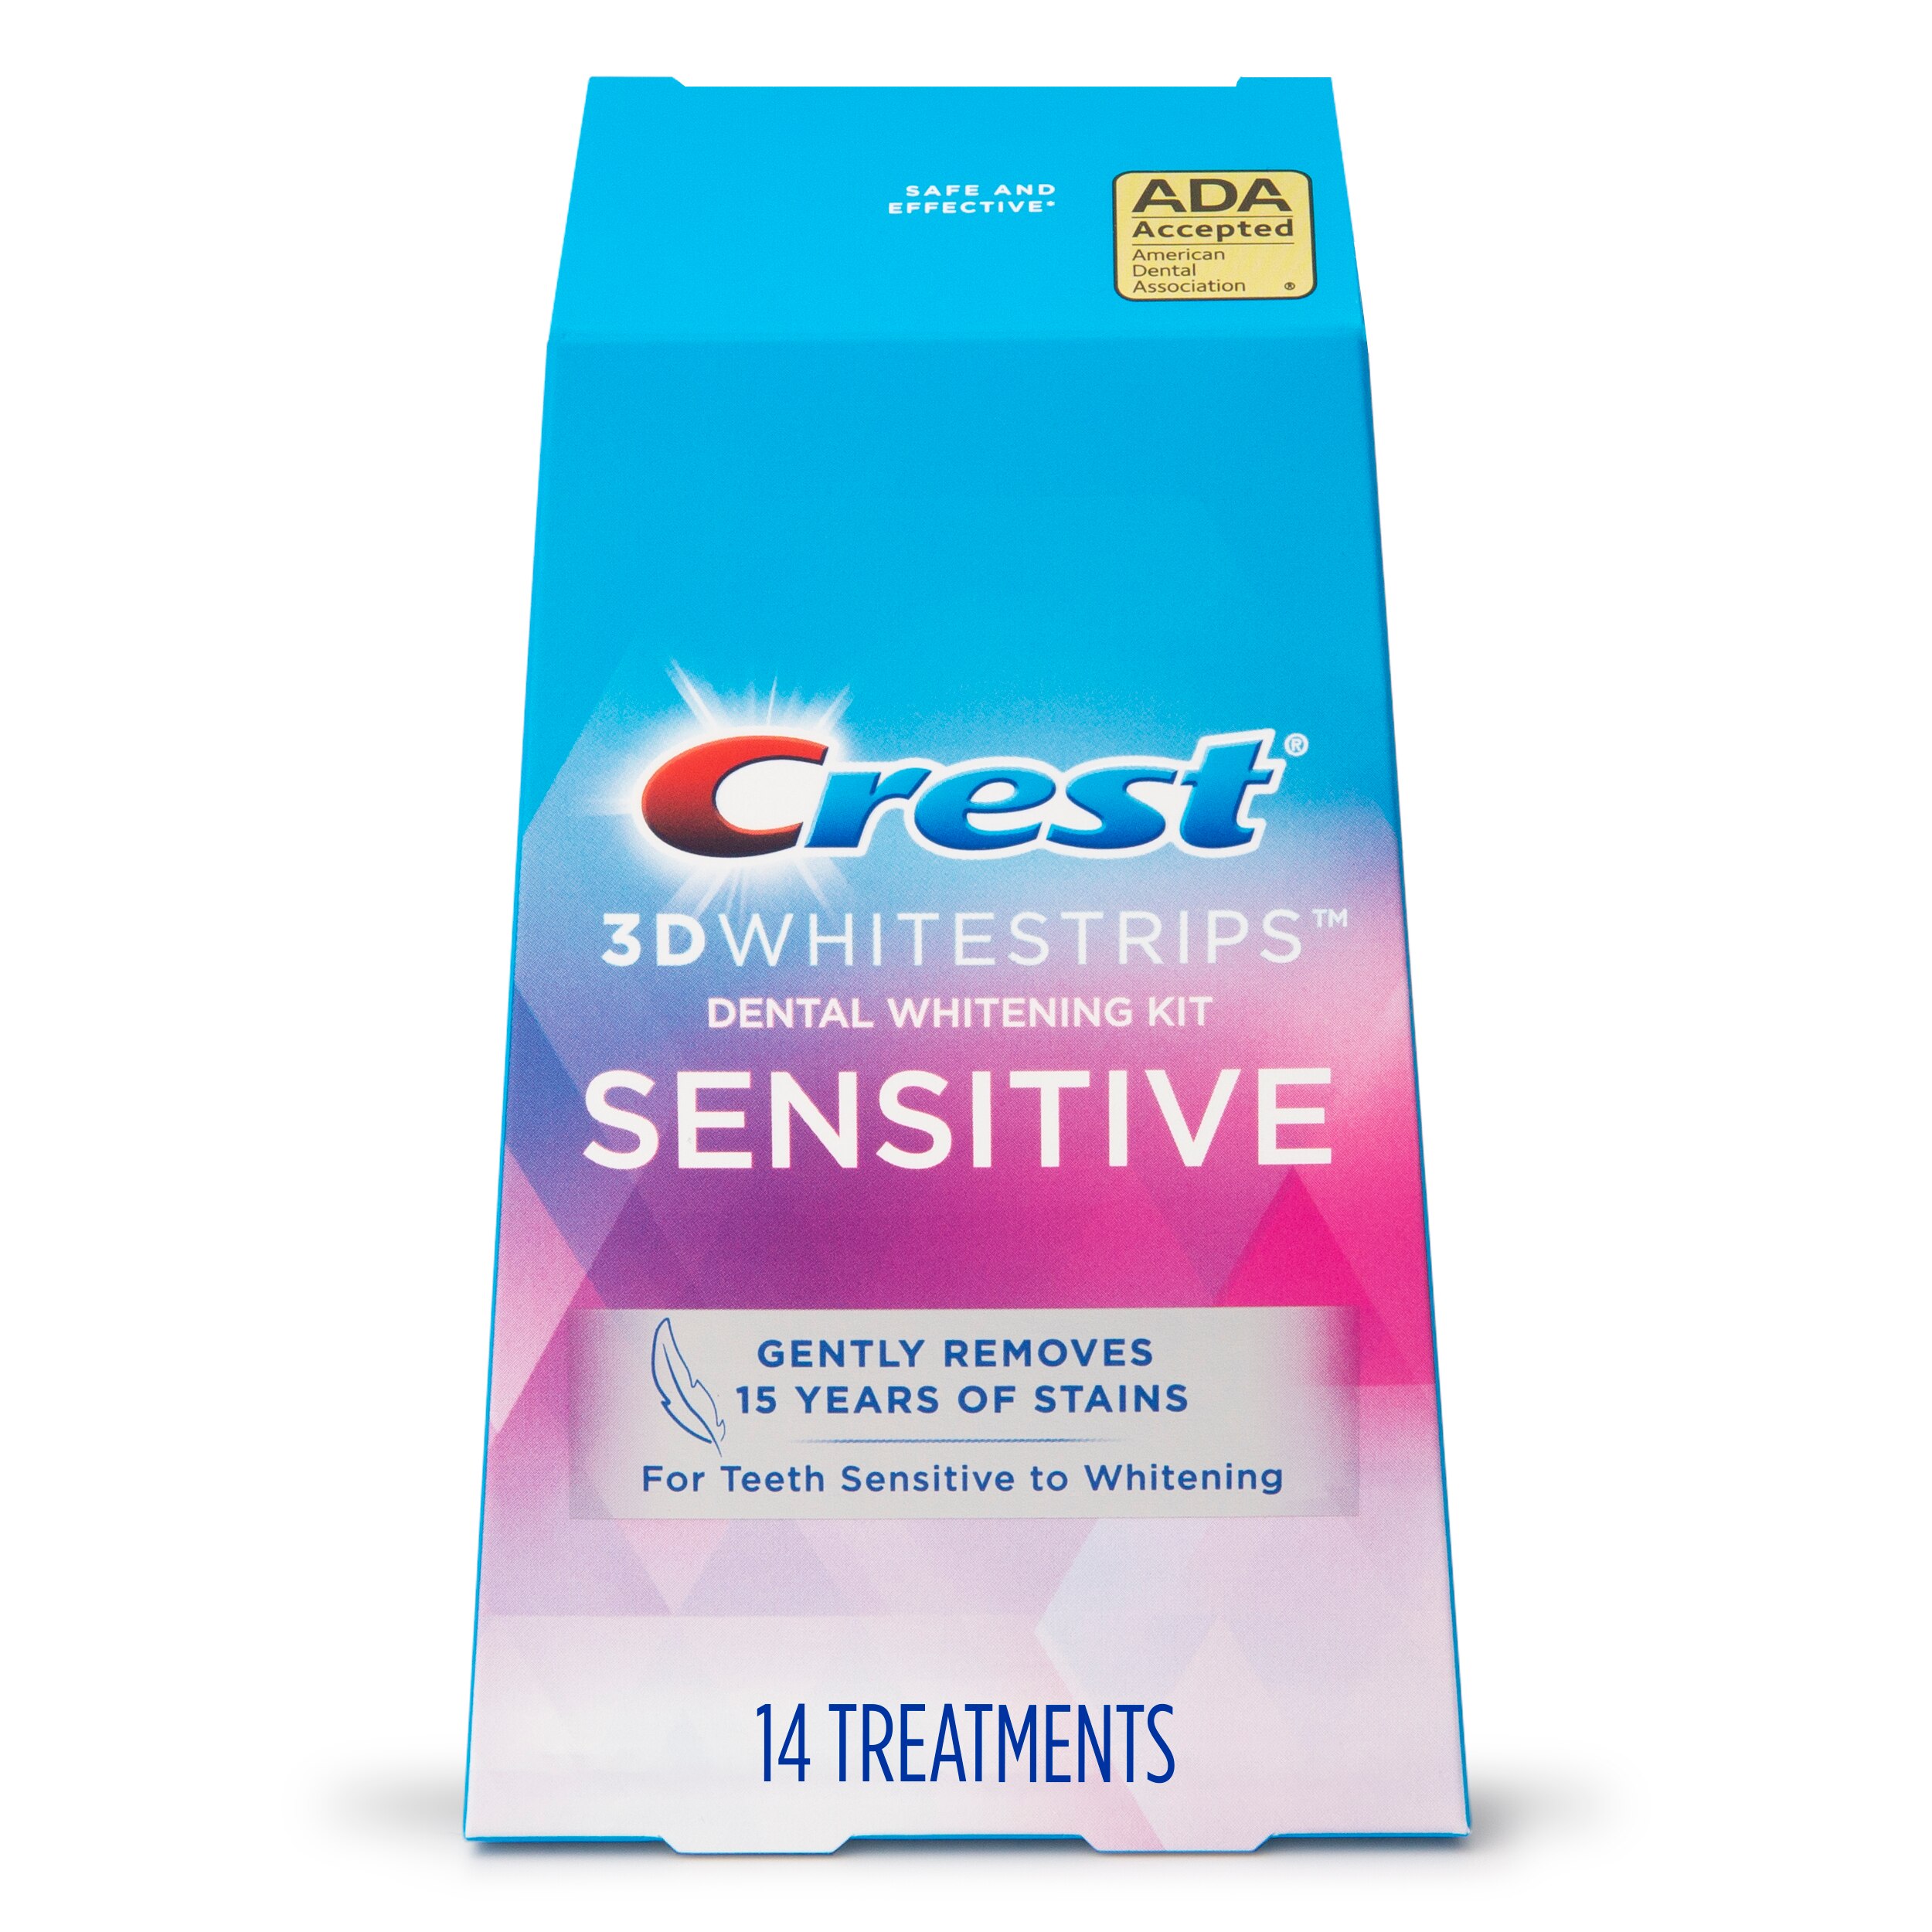 Crest 3DWhitestrips Sensitive At-home Teeth Whitening Kit, 14 Treatments